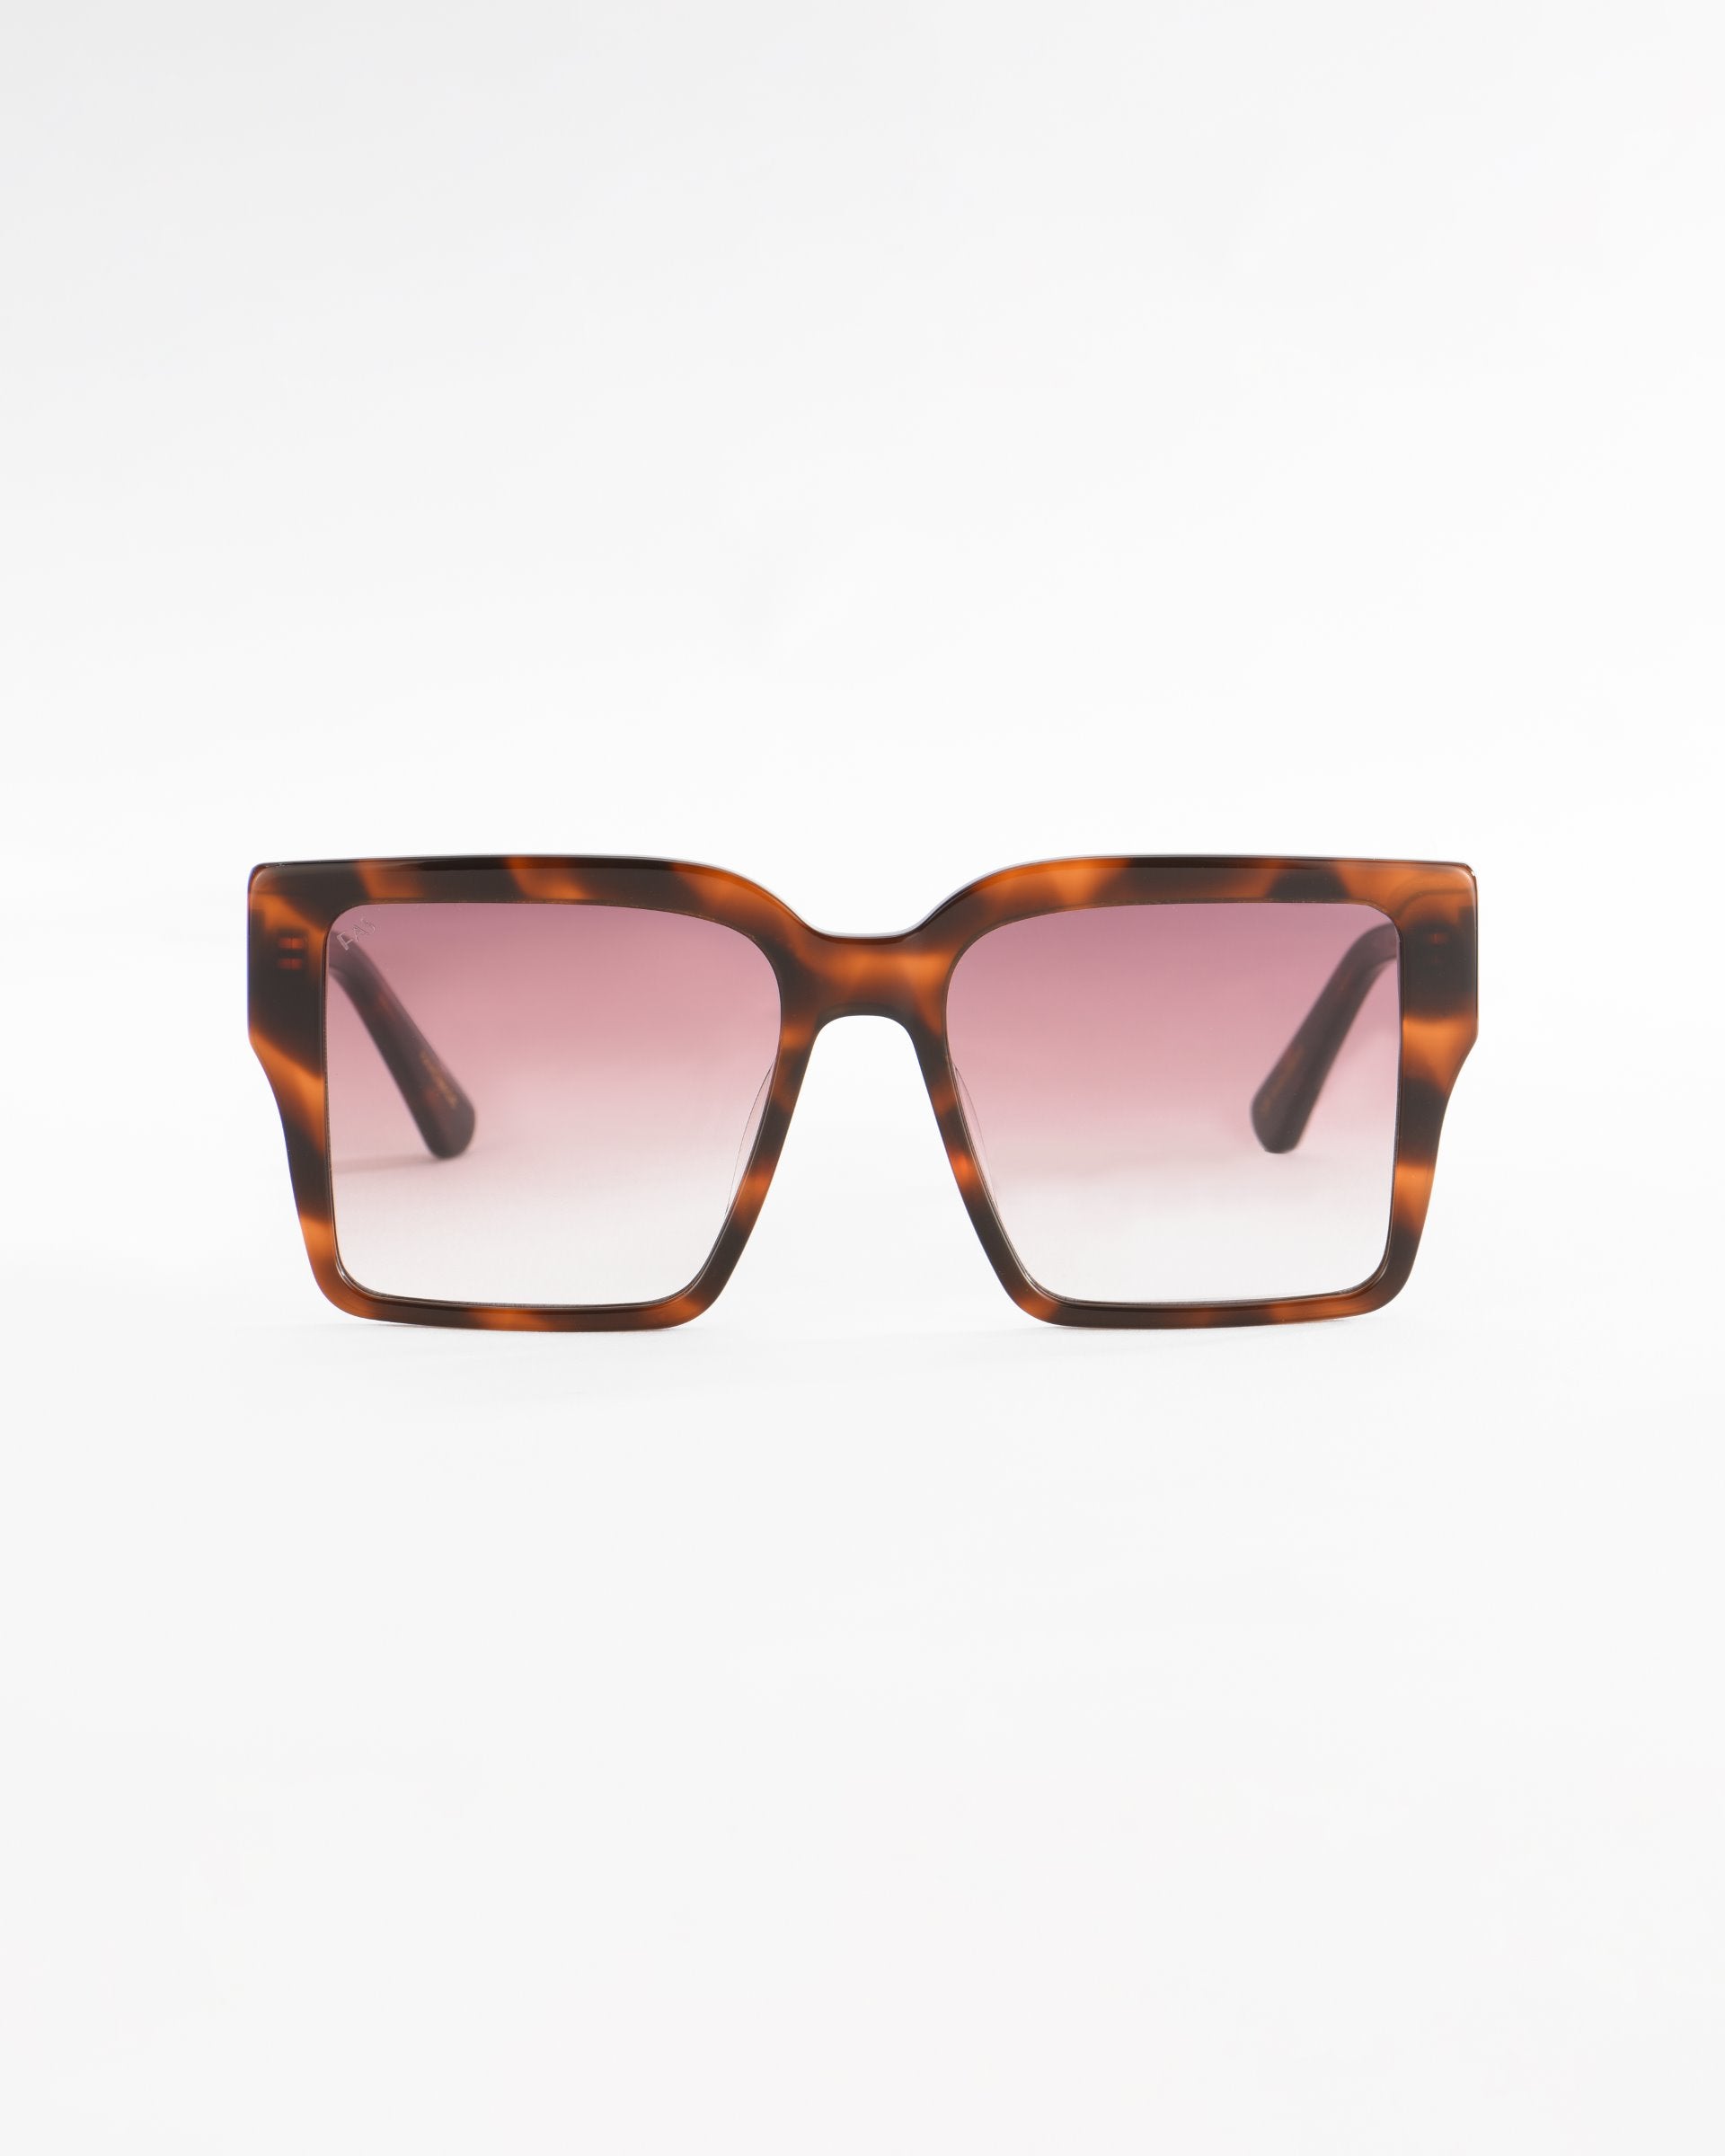 For Art&#39;s Sake® Castle, square, oversized sunglasses with tortoiseshell frames and ultra-lightweight, gradient pink lenses, set against a plain white background.